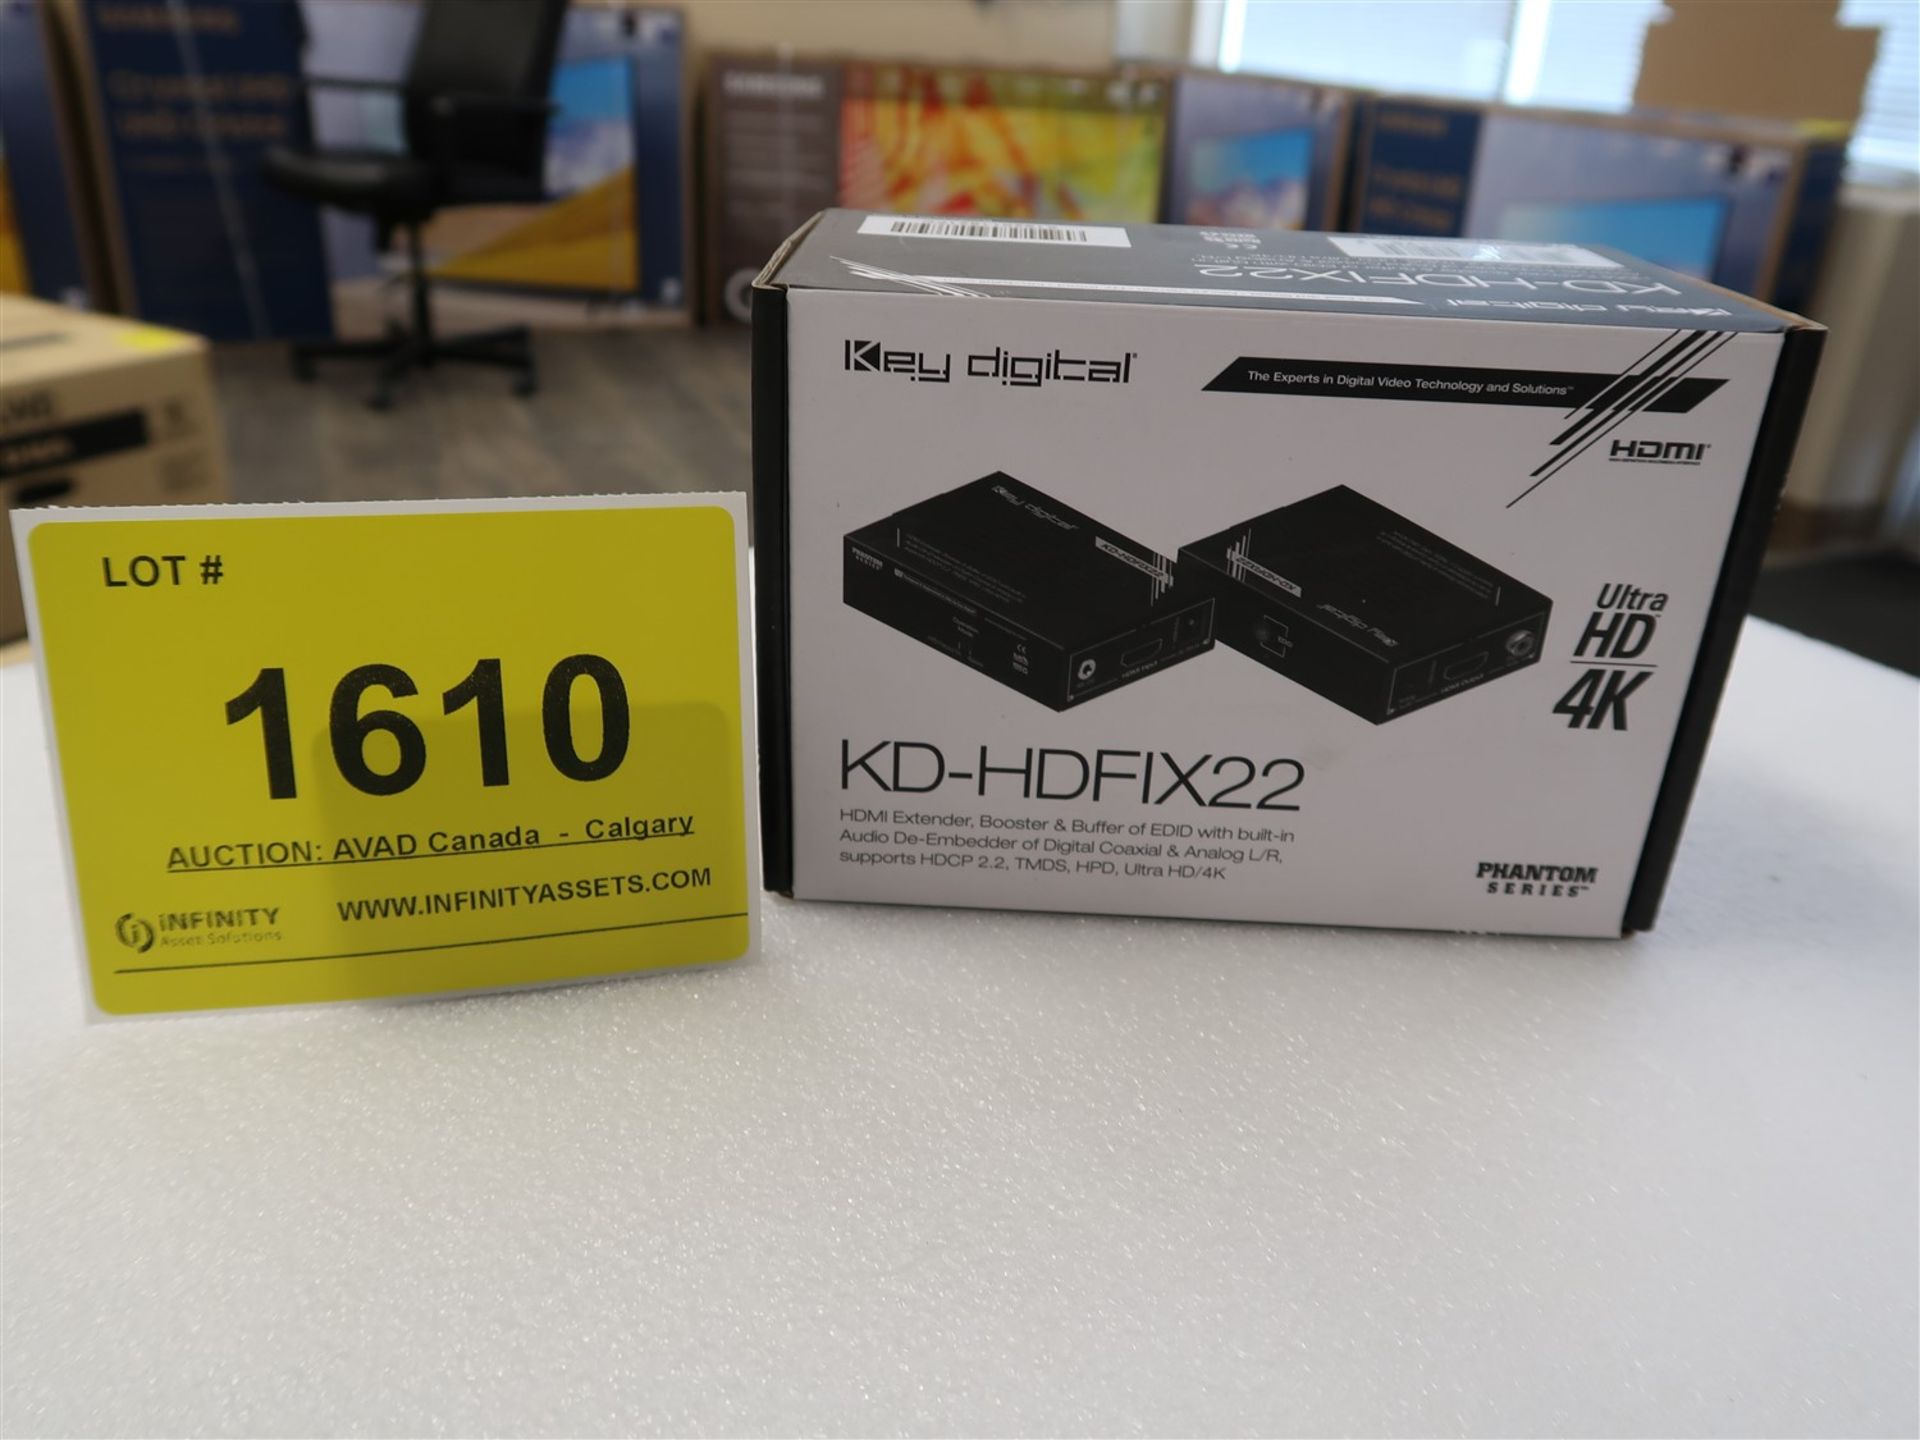 KEY DIGITAL KD-HDF1X22 HDMI EXTENDER, (BNIB)